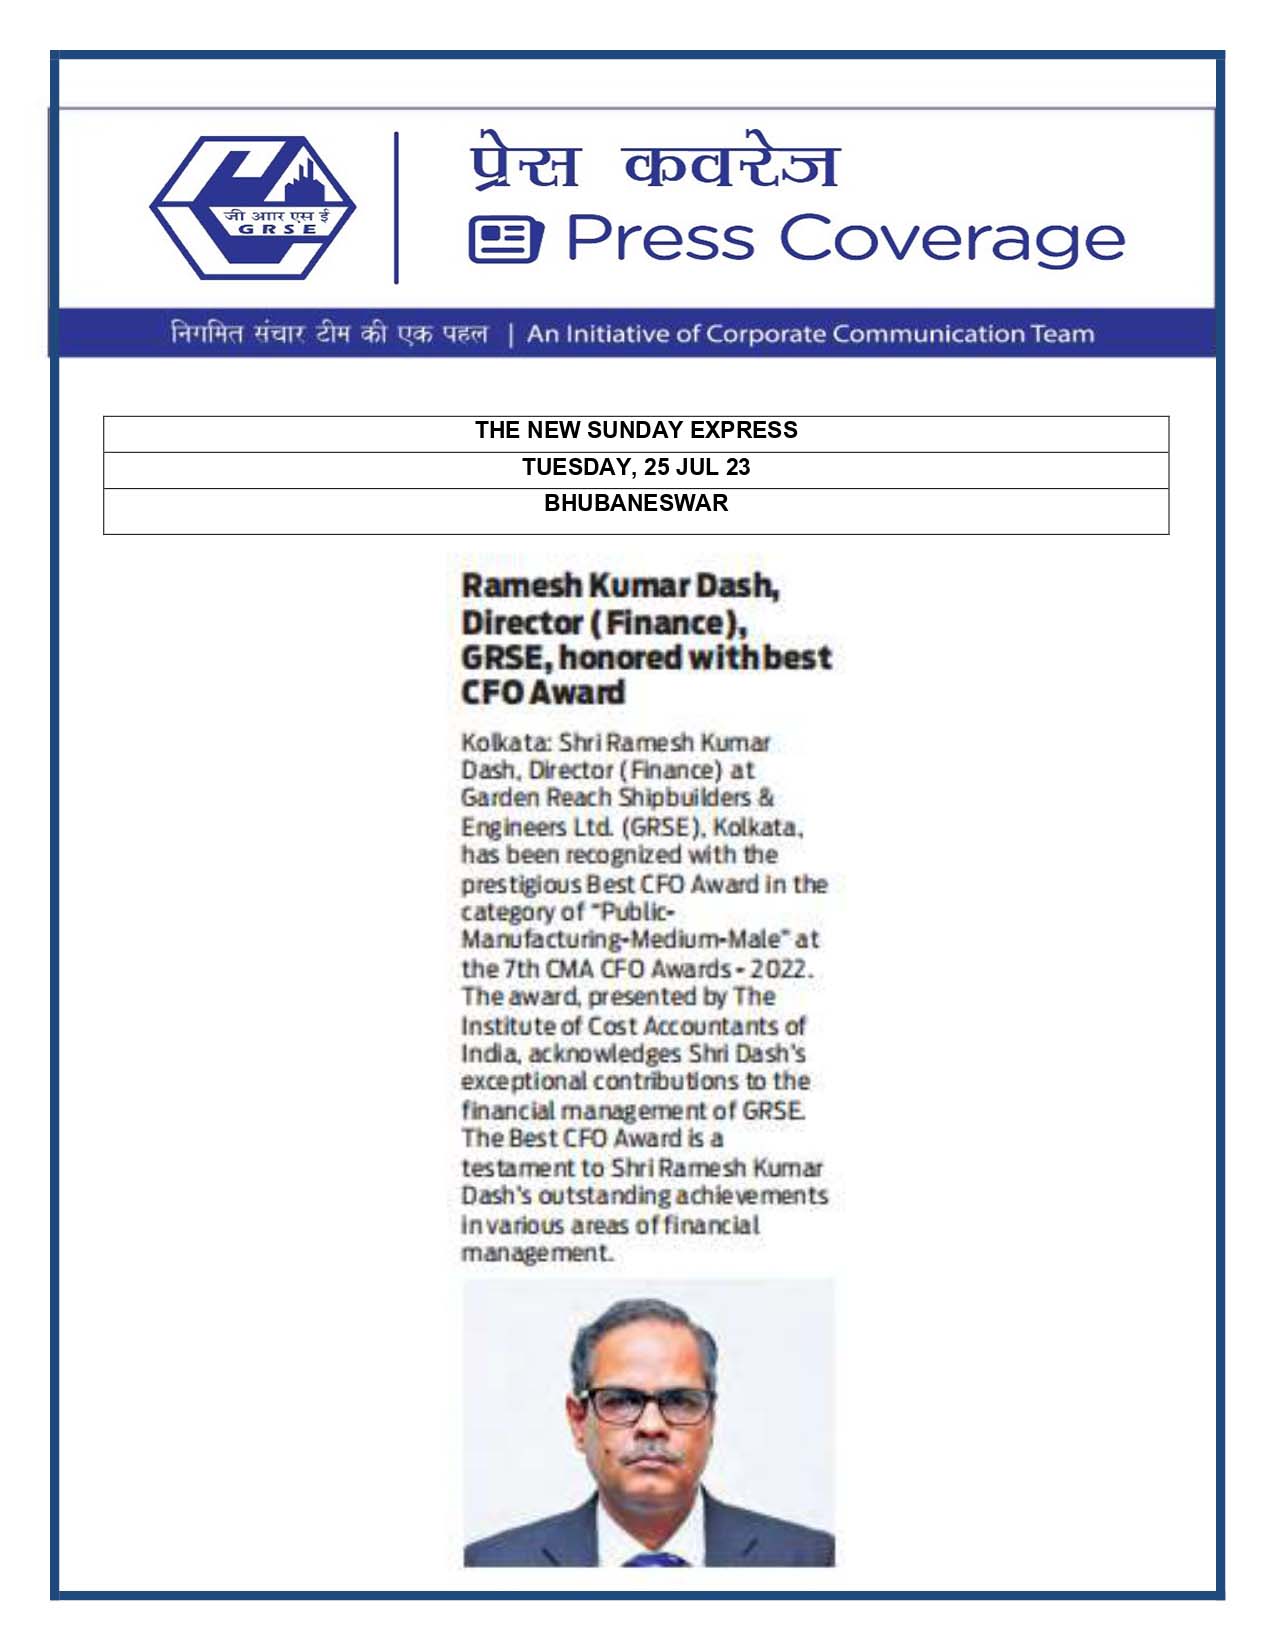 Press Coverage : The New Sunday Express, 25 Jul 23 : Ramesh Kumar Dash, Director (Finance), GRSE, honored with Best CFO Award